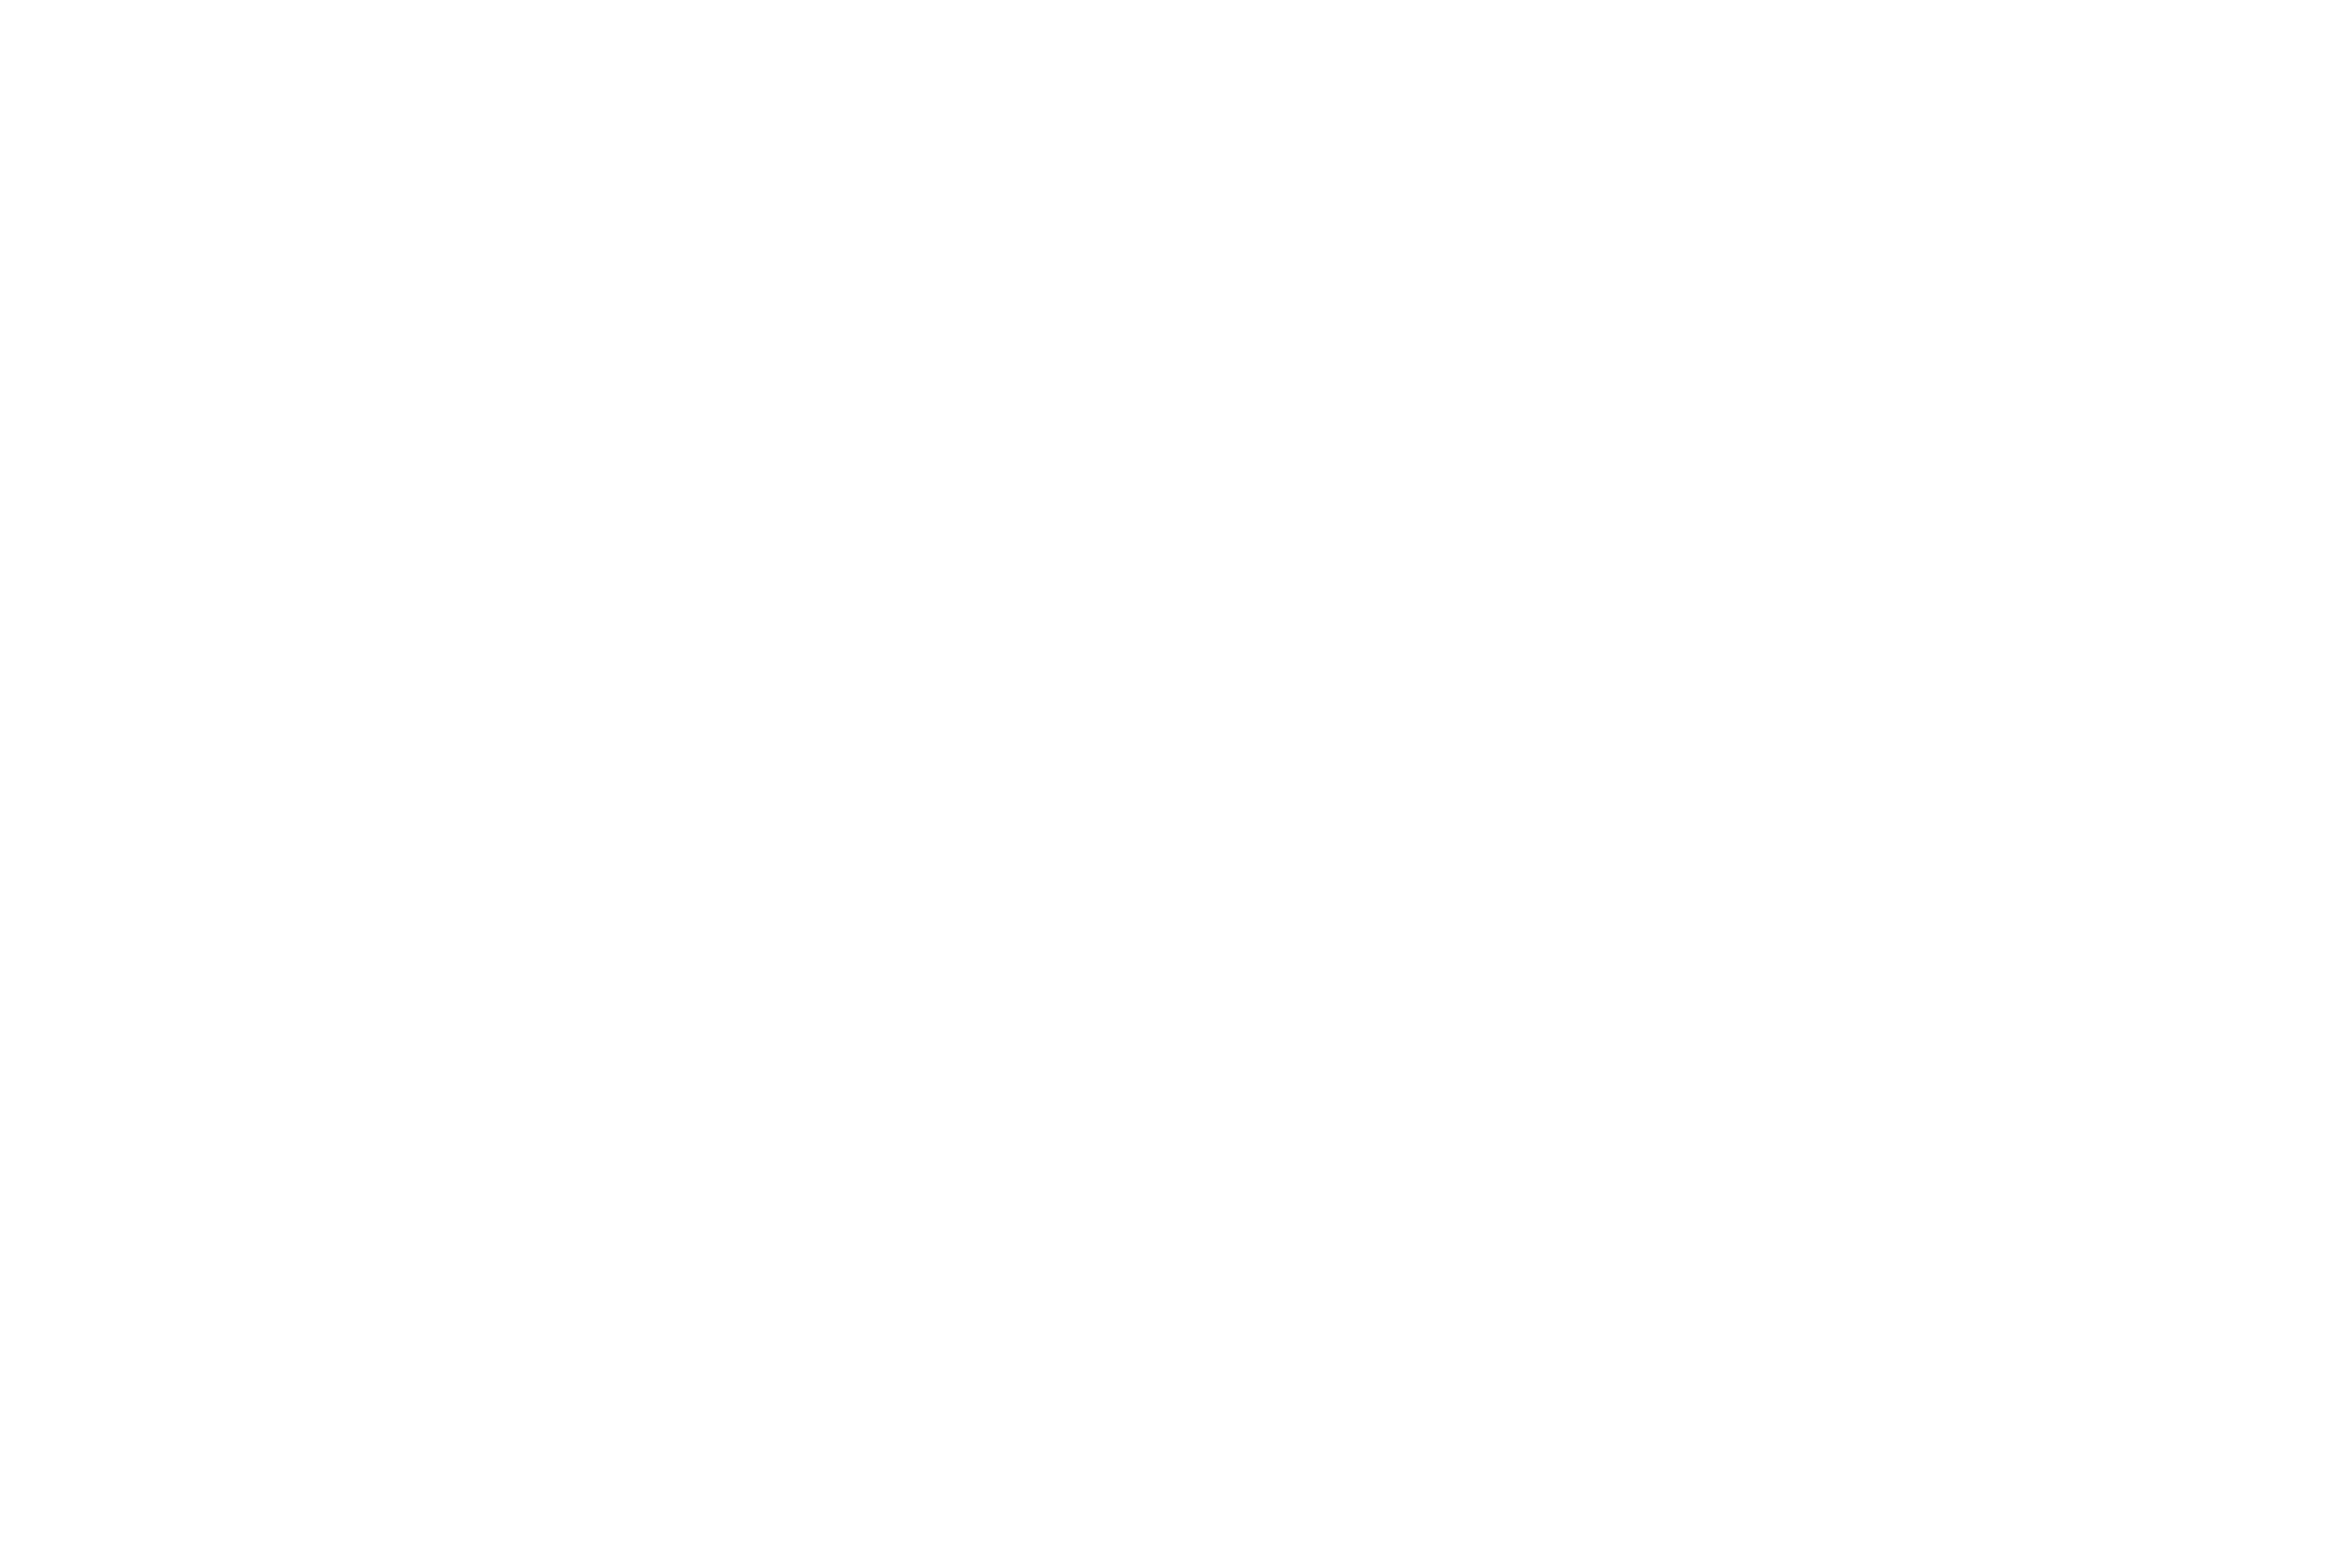 Moda Operandi logo in white